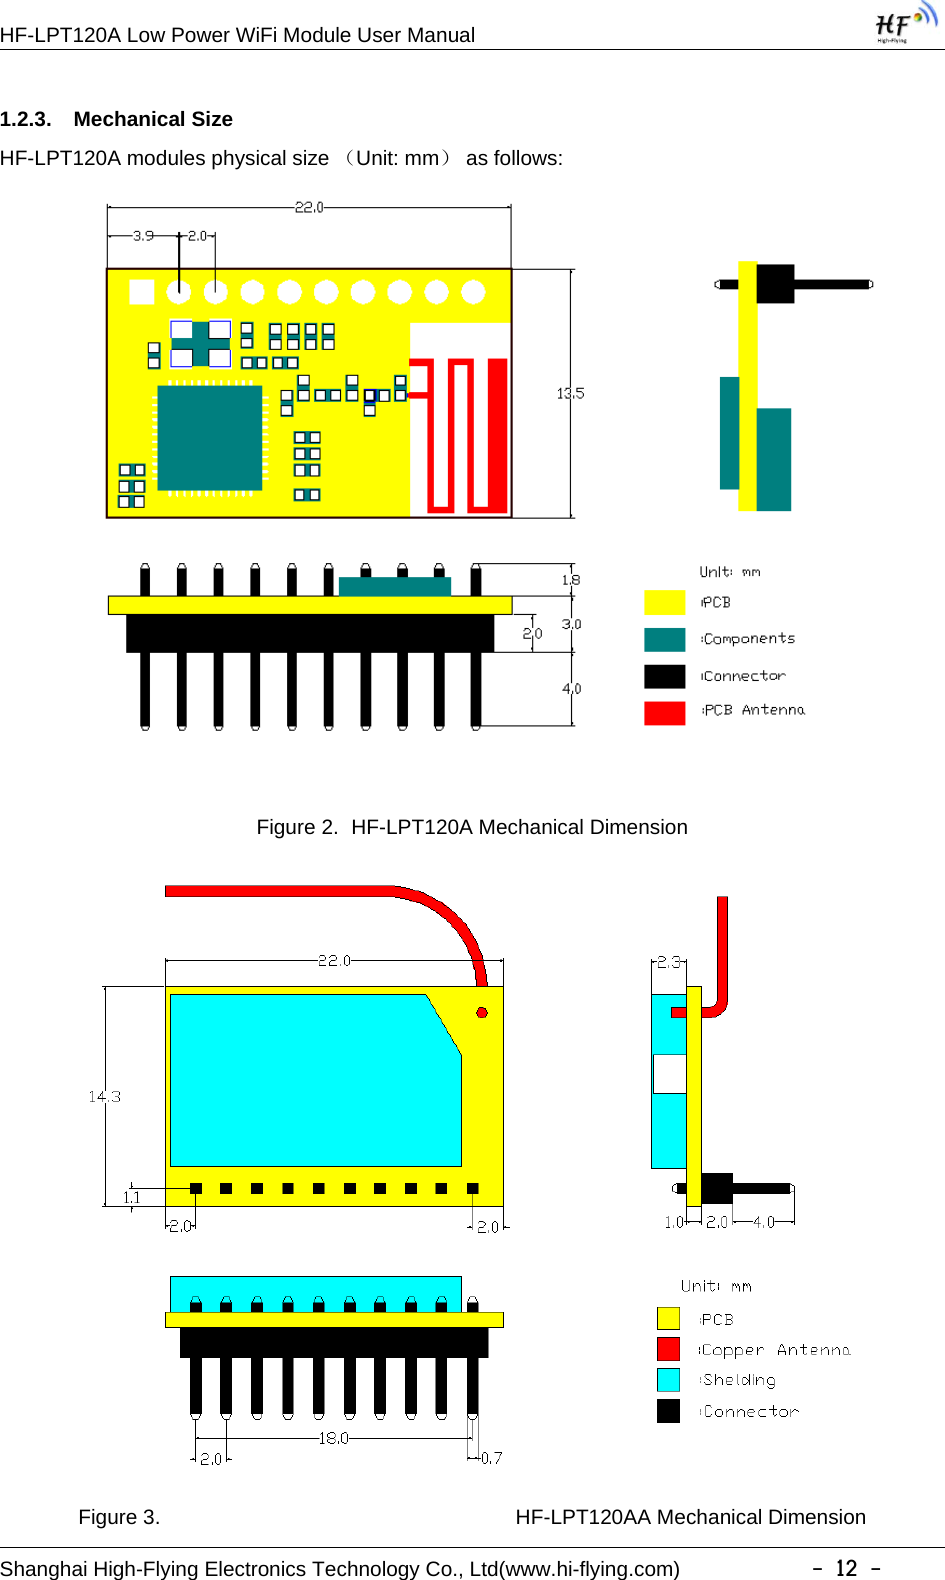 HF-LPT120A Low Power WiFi Module User ManualShanghai High-Flying Electronics Technology Co., Ltd(www.hi-flying.com) -12-1.2.3. Mechanical SizeHF-LPT120A modules physical size （Unit: mm）as follows:Figure 2. HF-LPT120A Mechanical DimensionFigure 3. HF-LPT120AA Mechanical Dimension